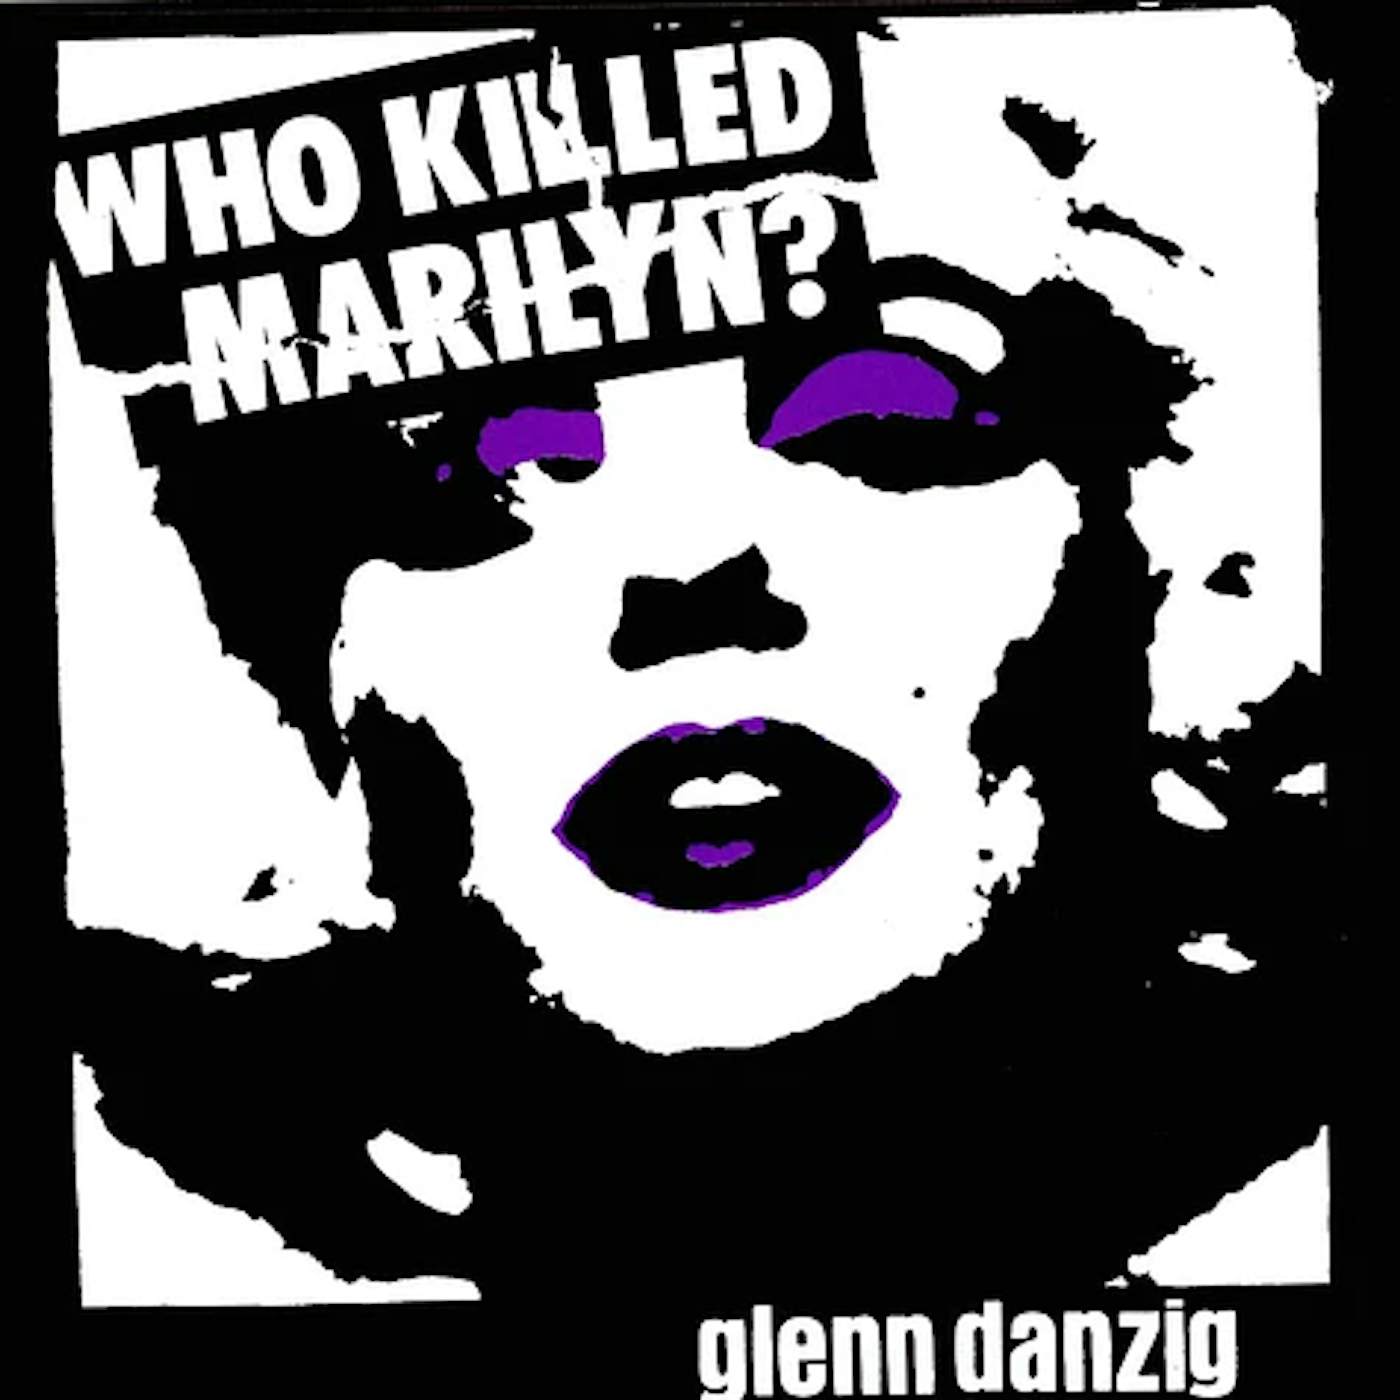 Danzig WHO KILLED MARILYN? Vinyl Record